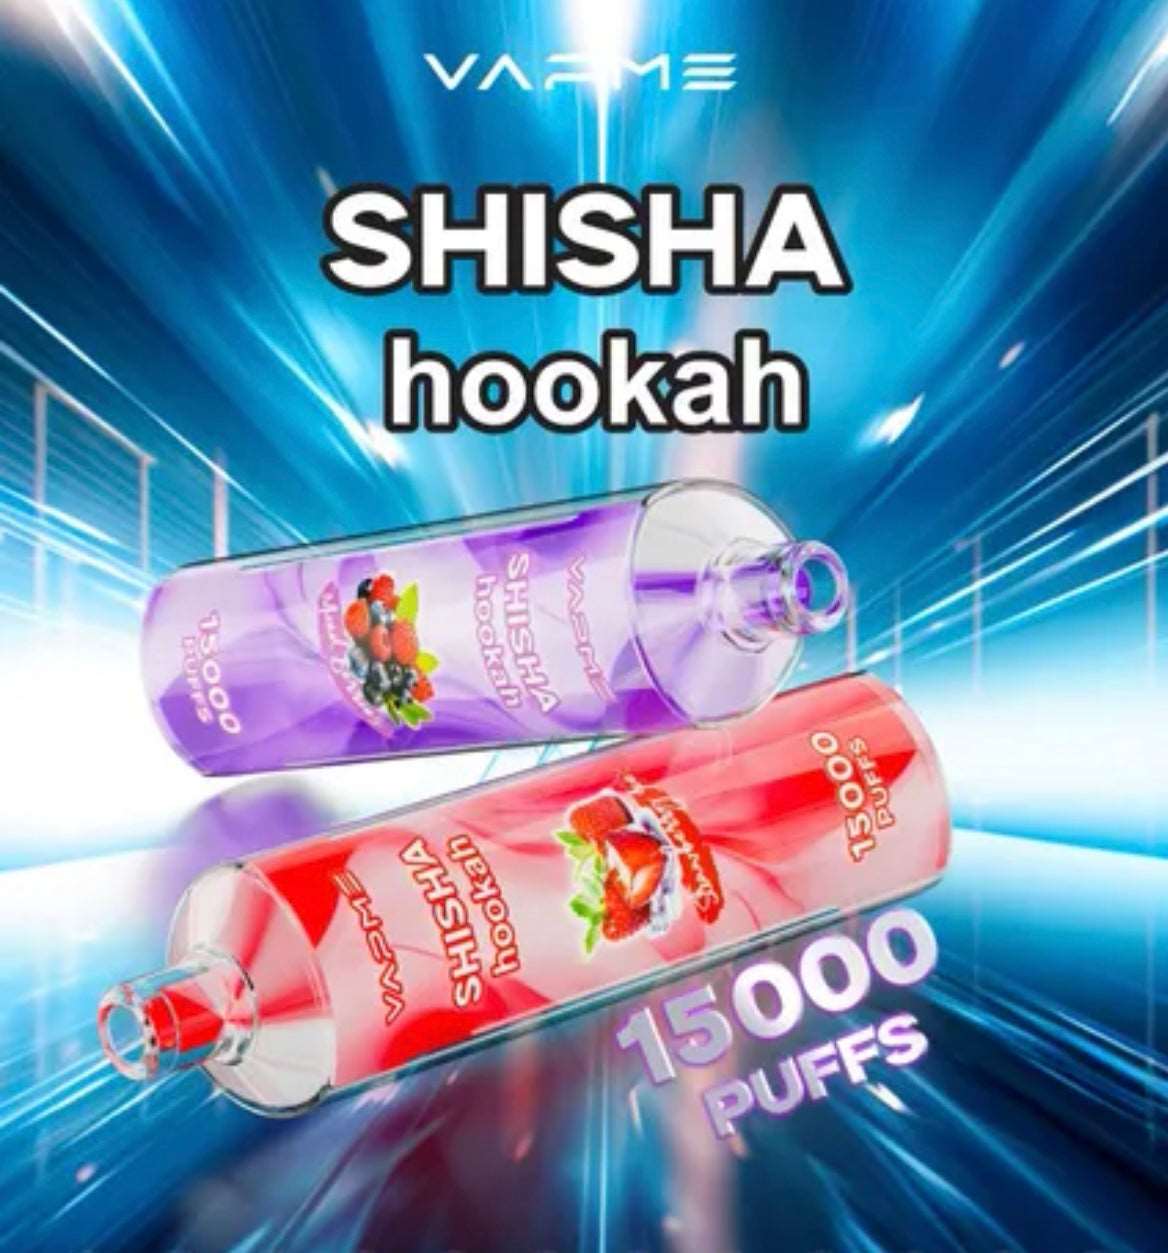 PUFF 15000 VAPME SHISHA HOOKAH - 12 Parfums  -